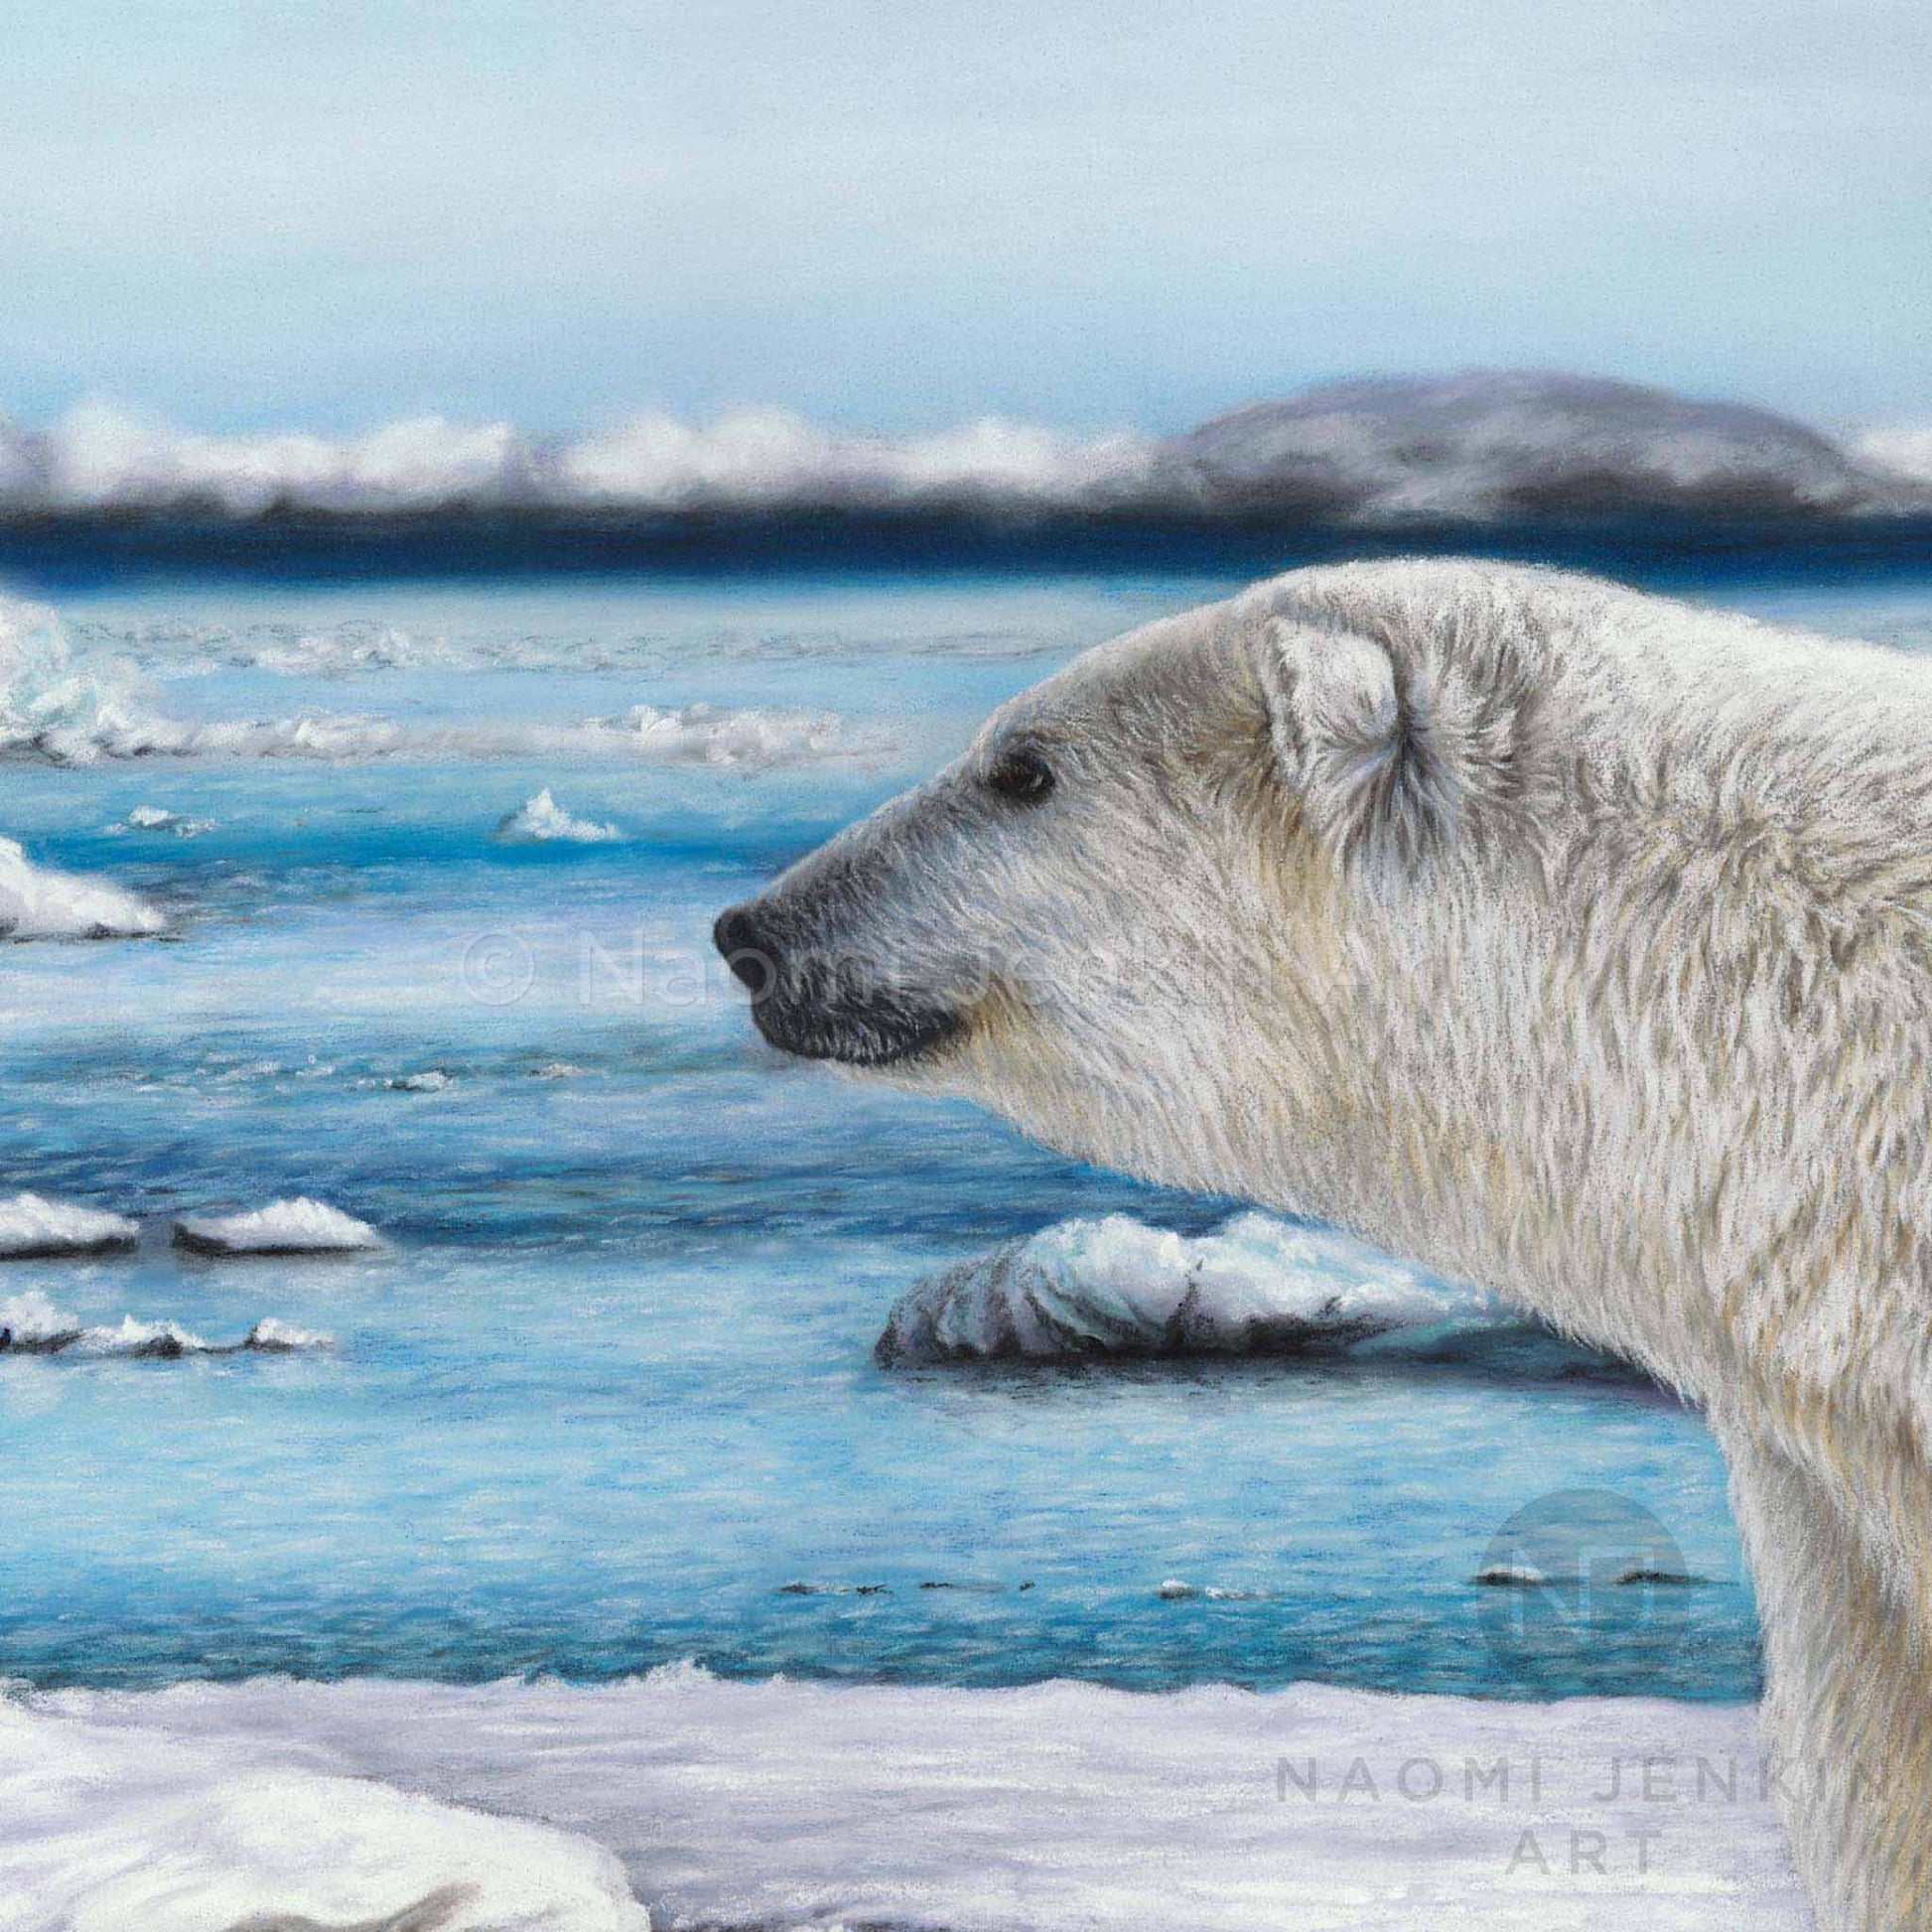 Original polar bear wildlife art by wildlife artist Naomi Jenkin Art